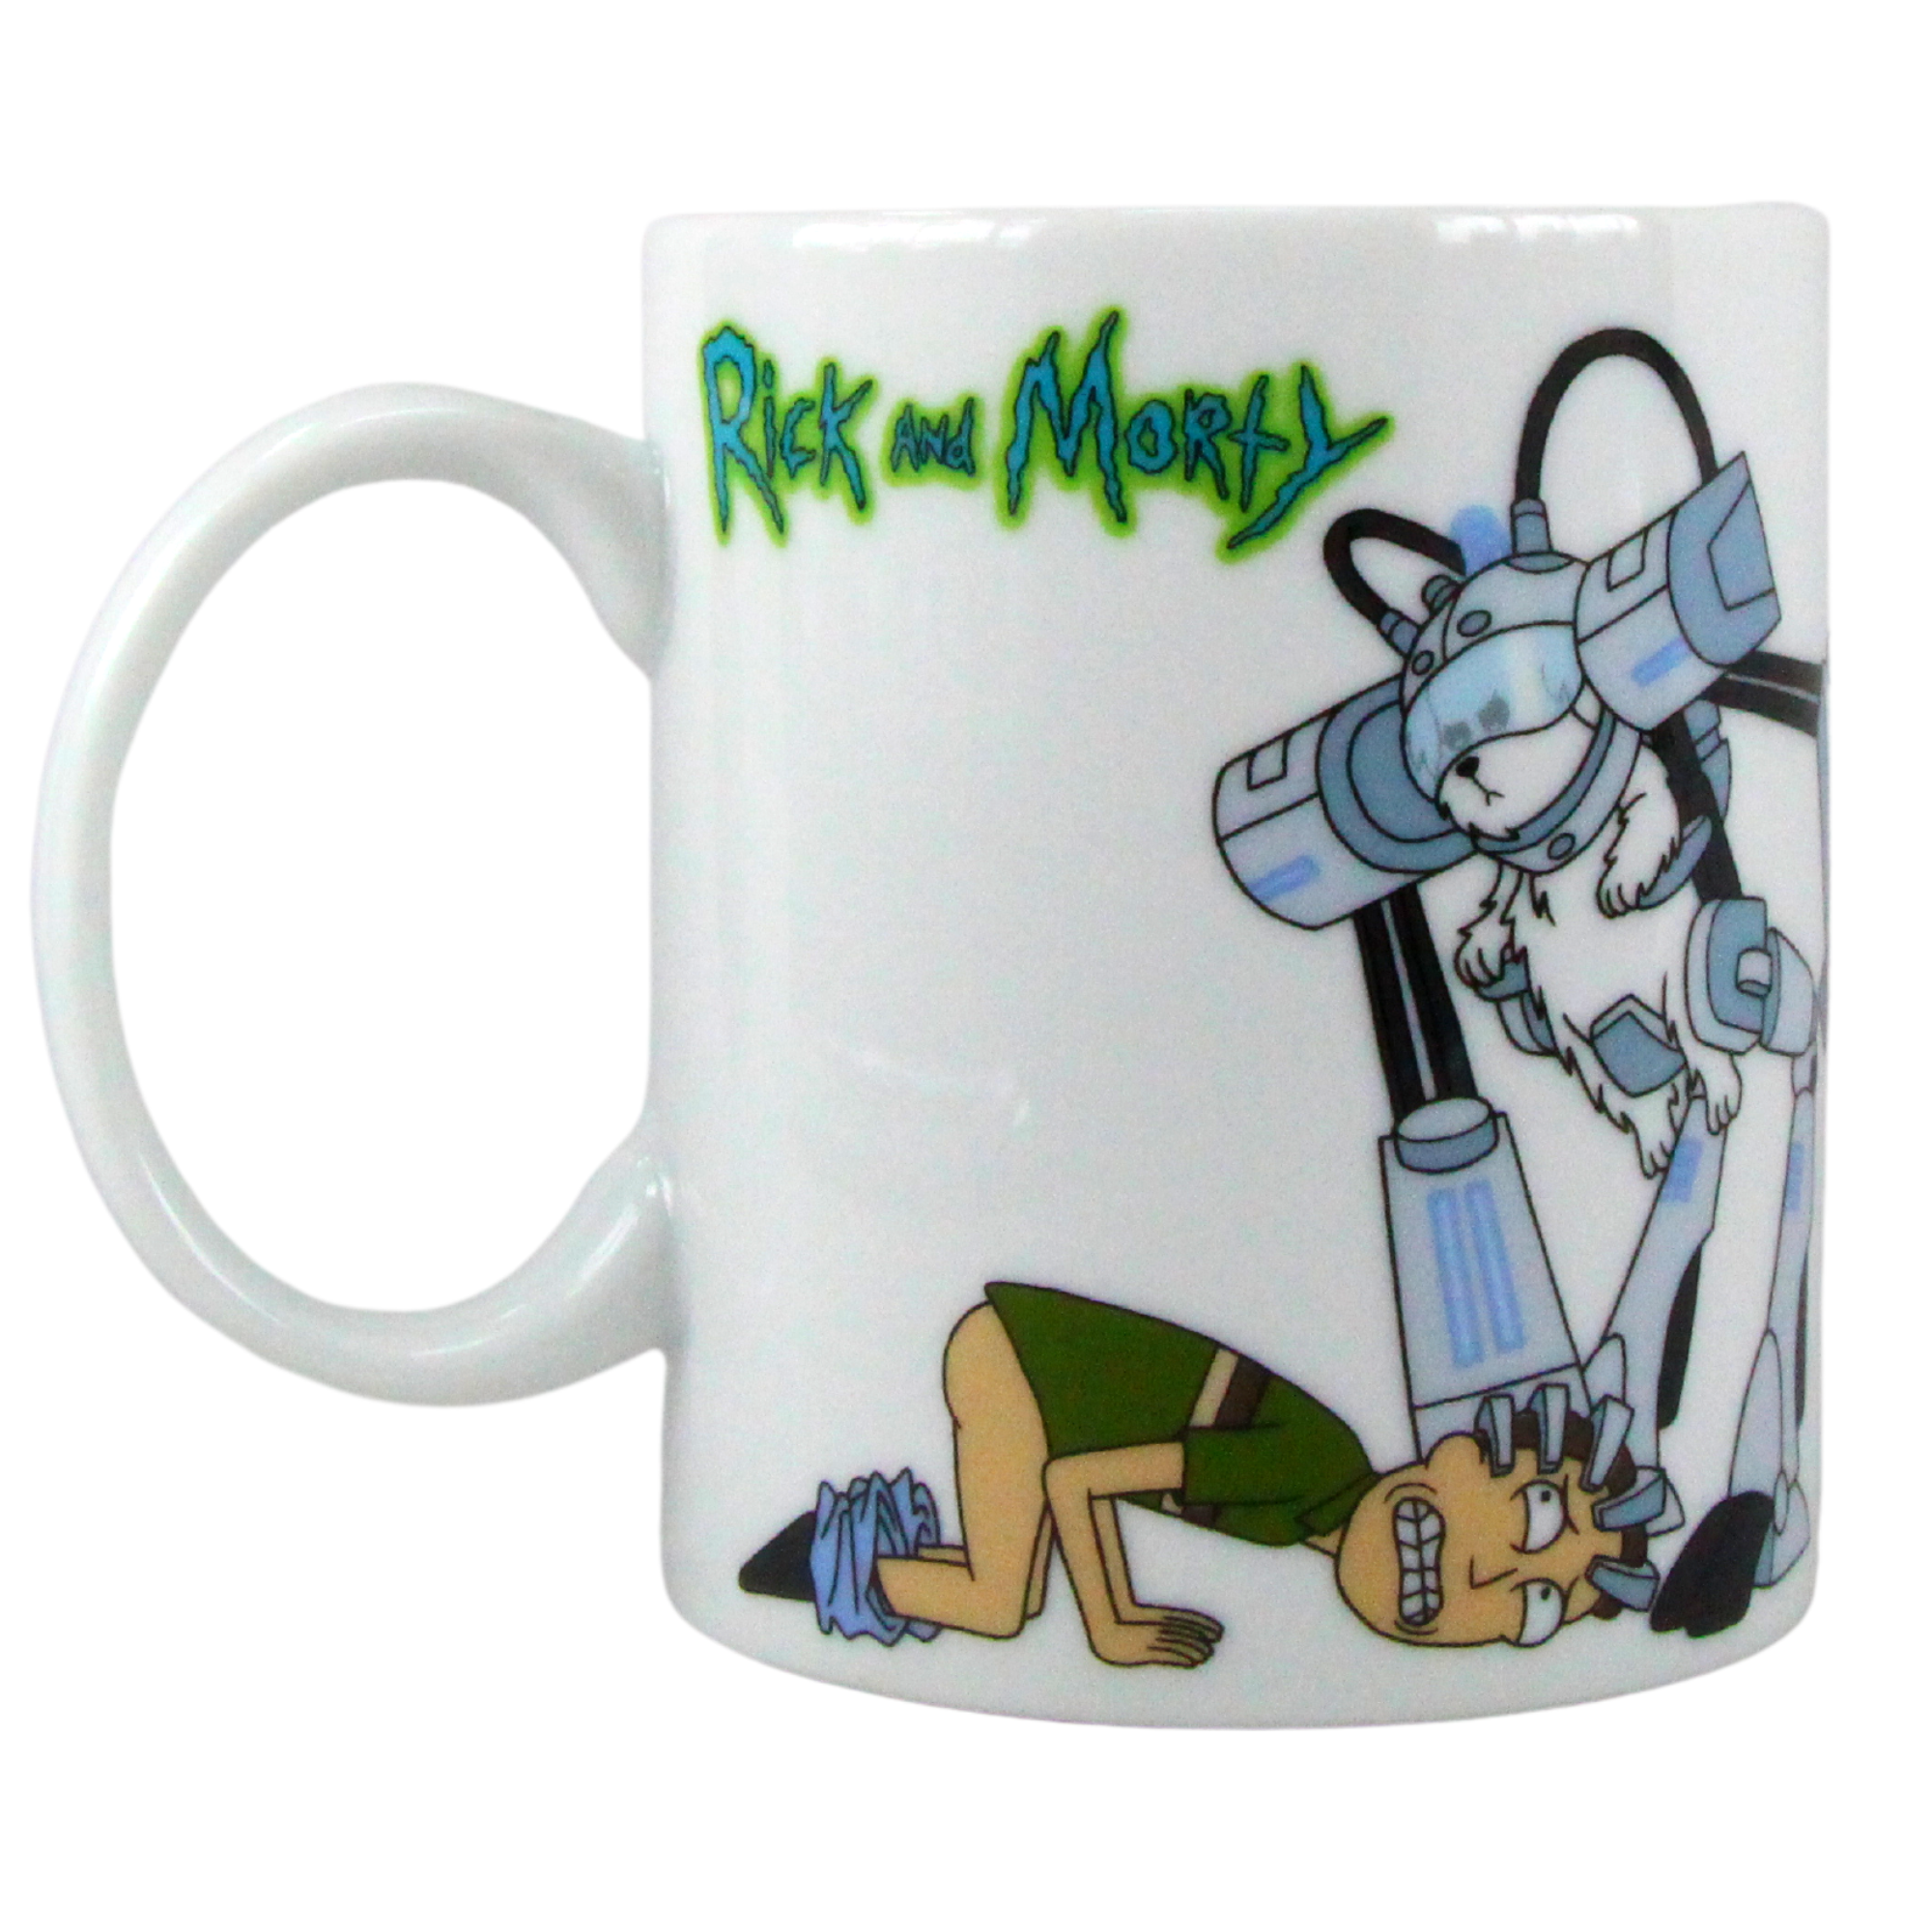 Rick and Morty - Snowball Bad Person Bad Mug - Toptoys2u